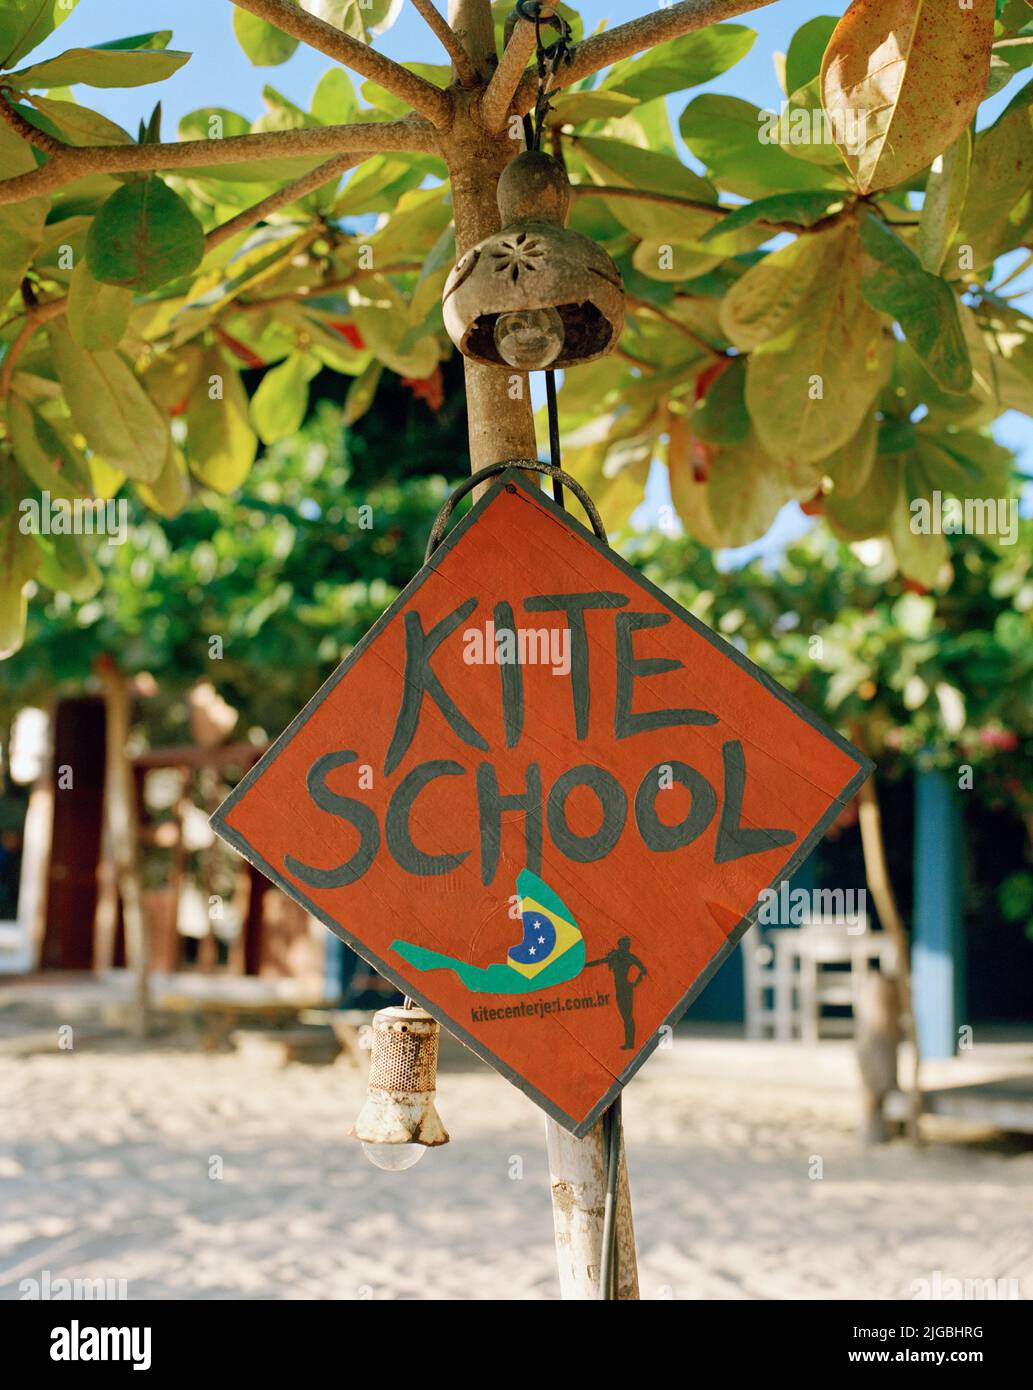 A sign advertising a kite boarding school. On the main beach. Jericoacoara, Ceará, Brazil. Stock Photo